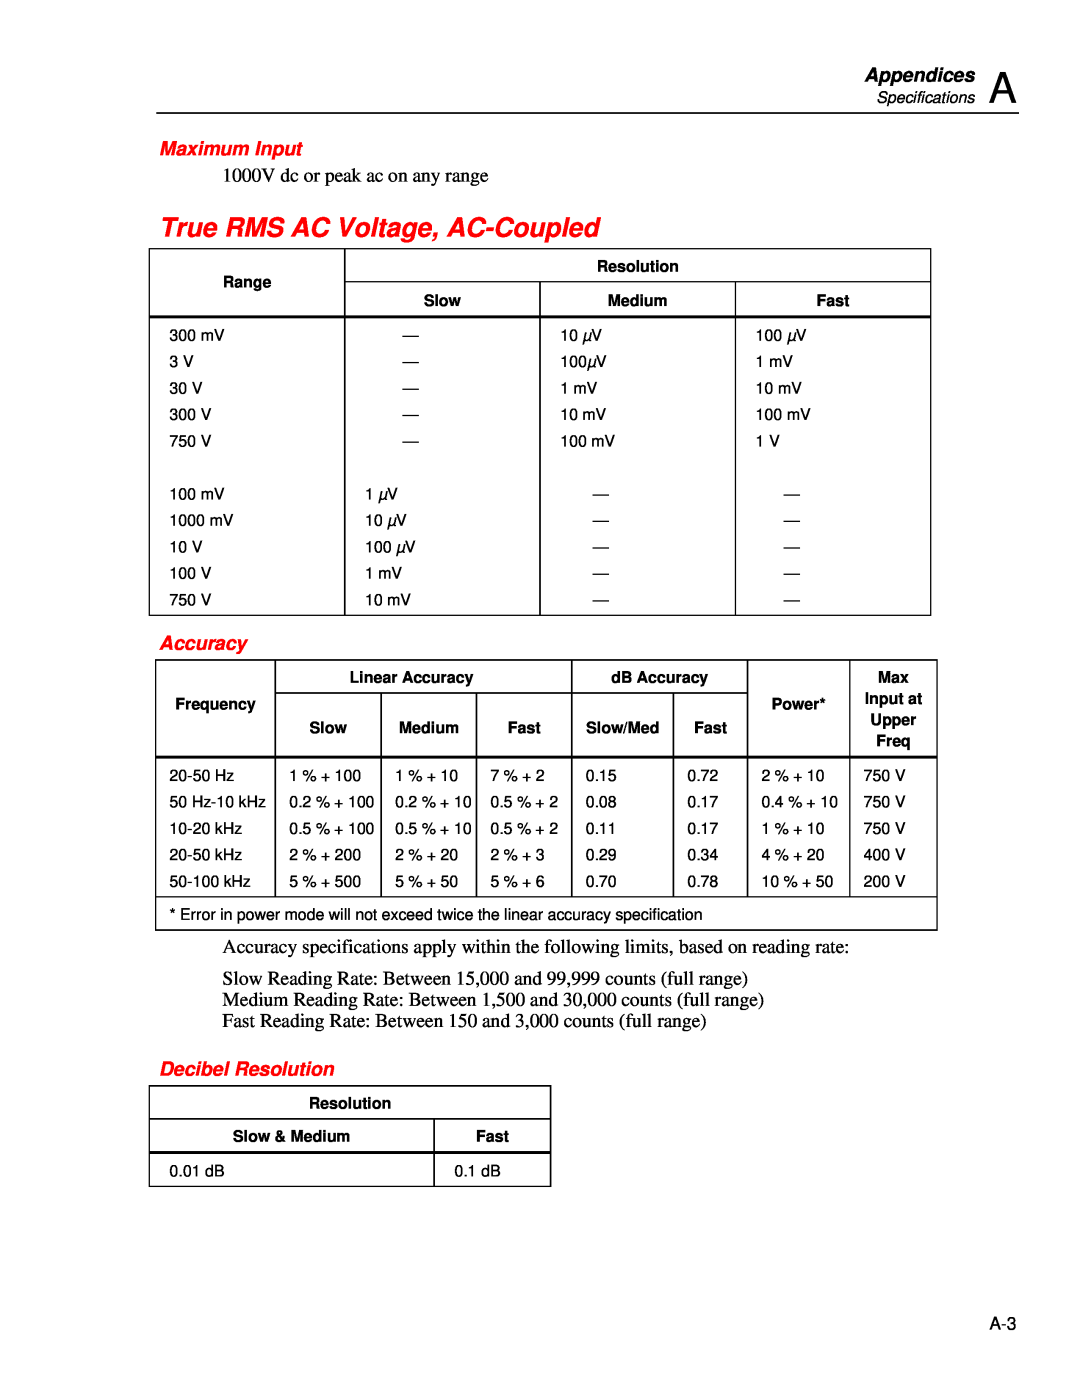 Fluke 45 user manual True RMS AC Voltage, AC-Coupled, Appendices, Maximum Input, Accuracy, Decibel Resolution 